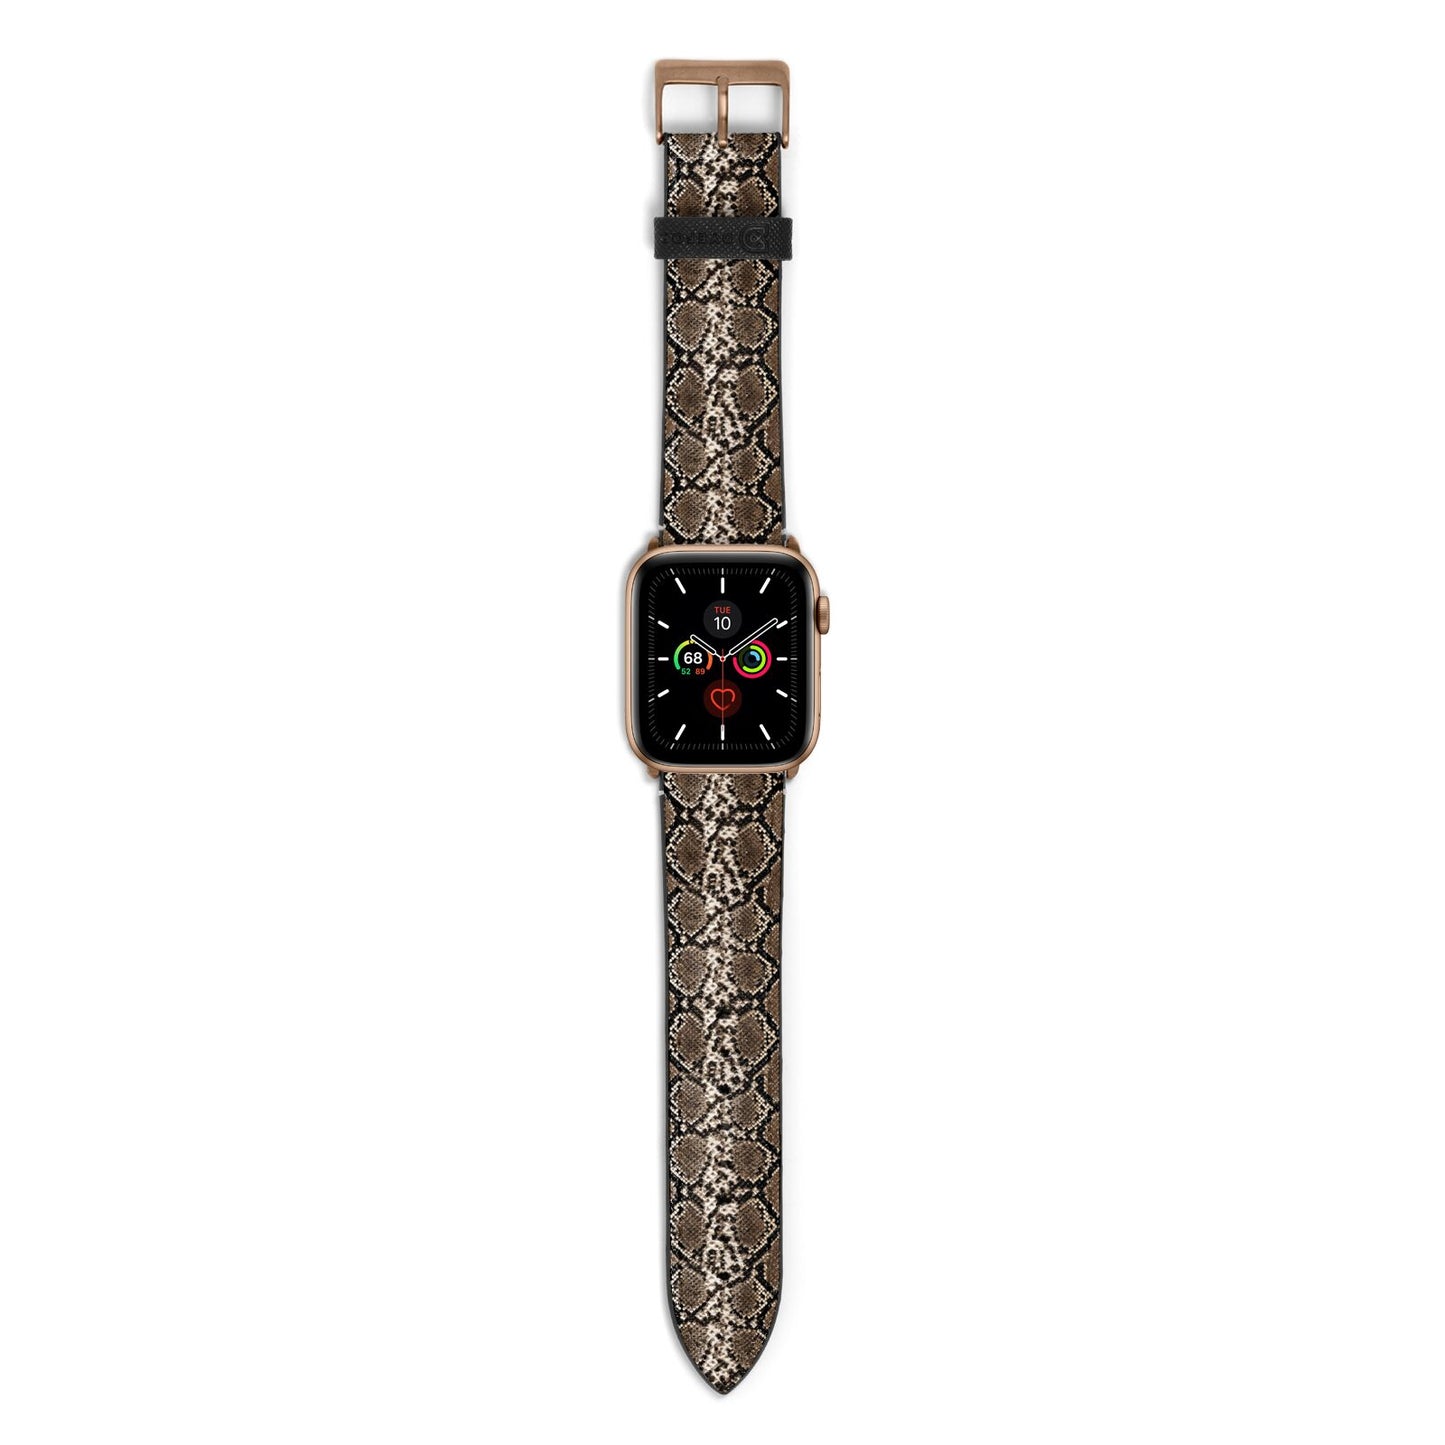 Snakeskin Pattern Apple Watch Strap with Gold Hardware